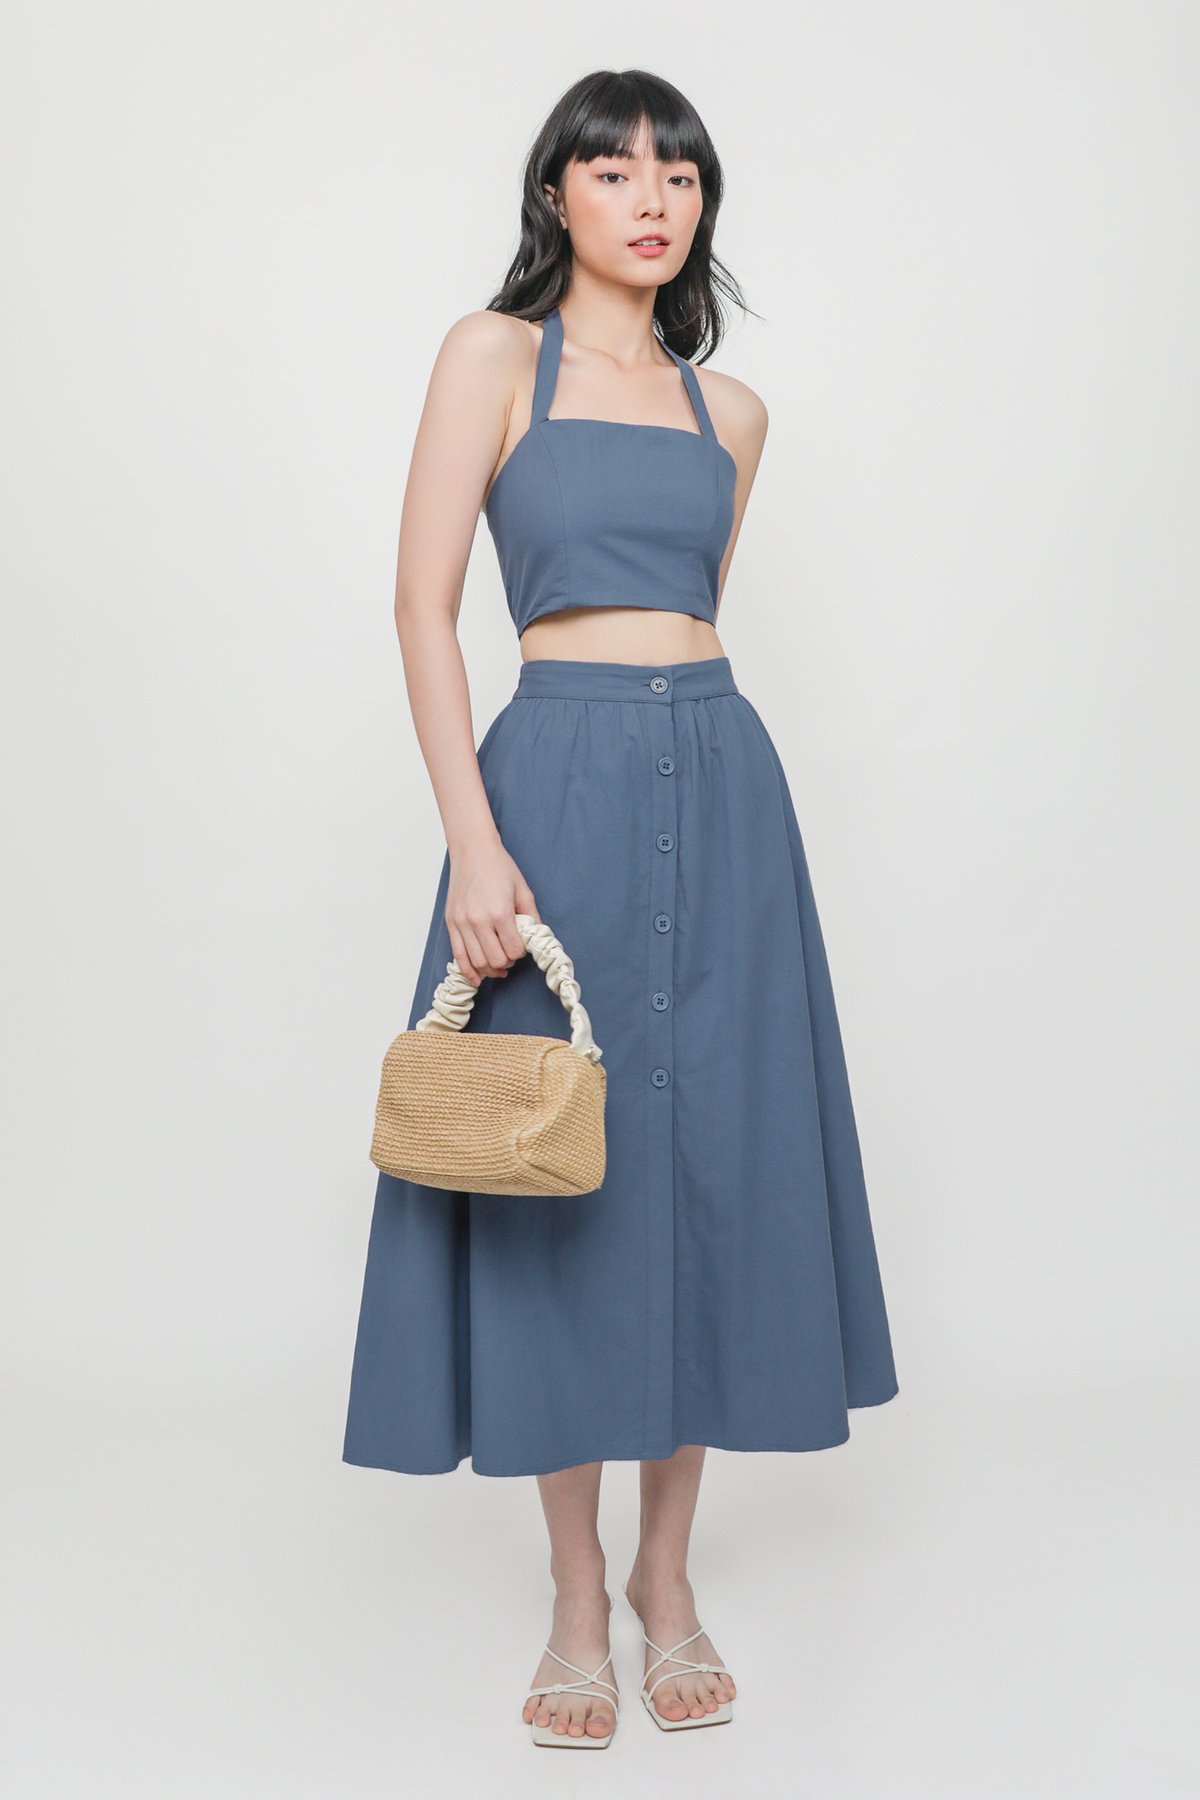 Agnes Button Midi Skirt (Steel Blue)